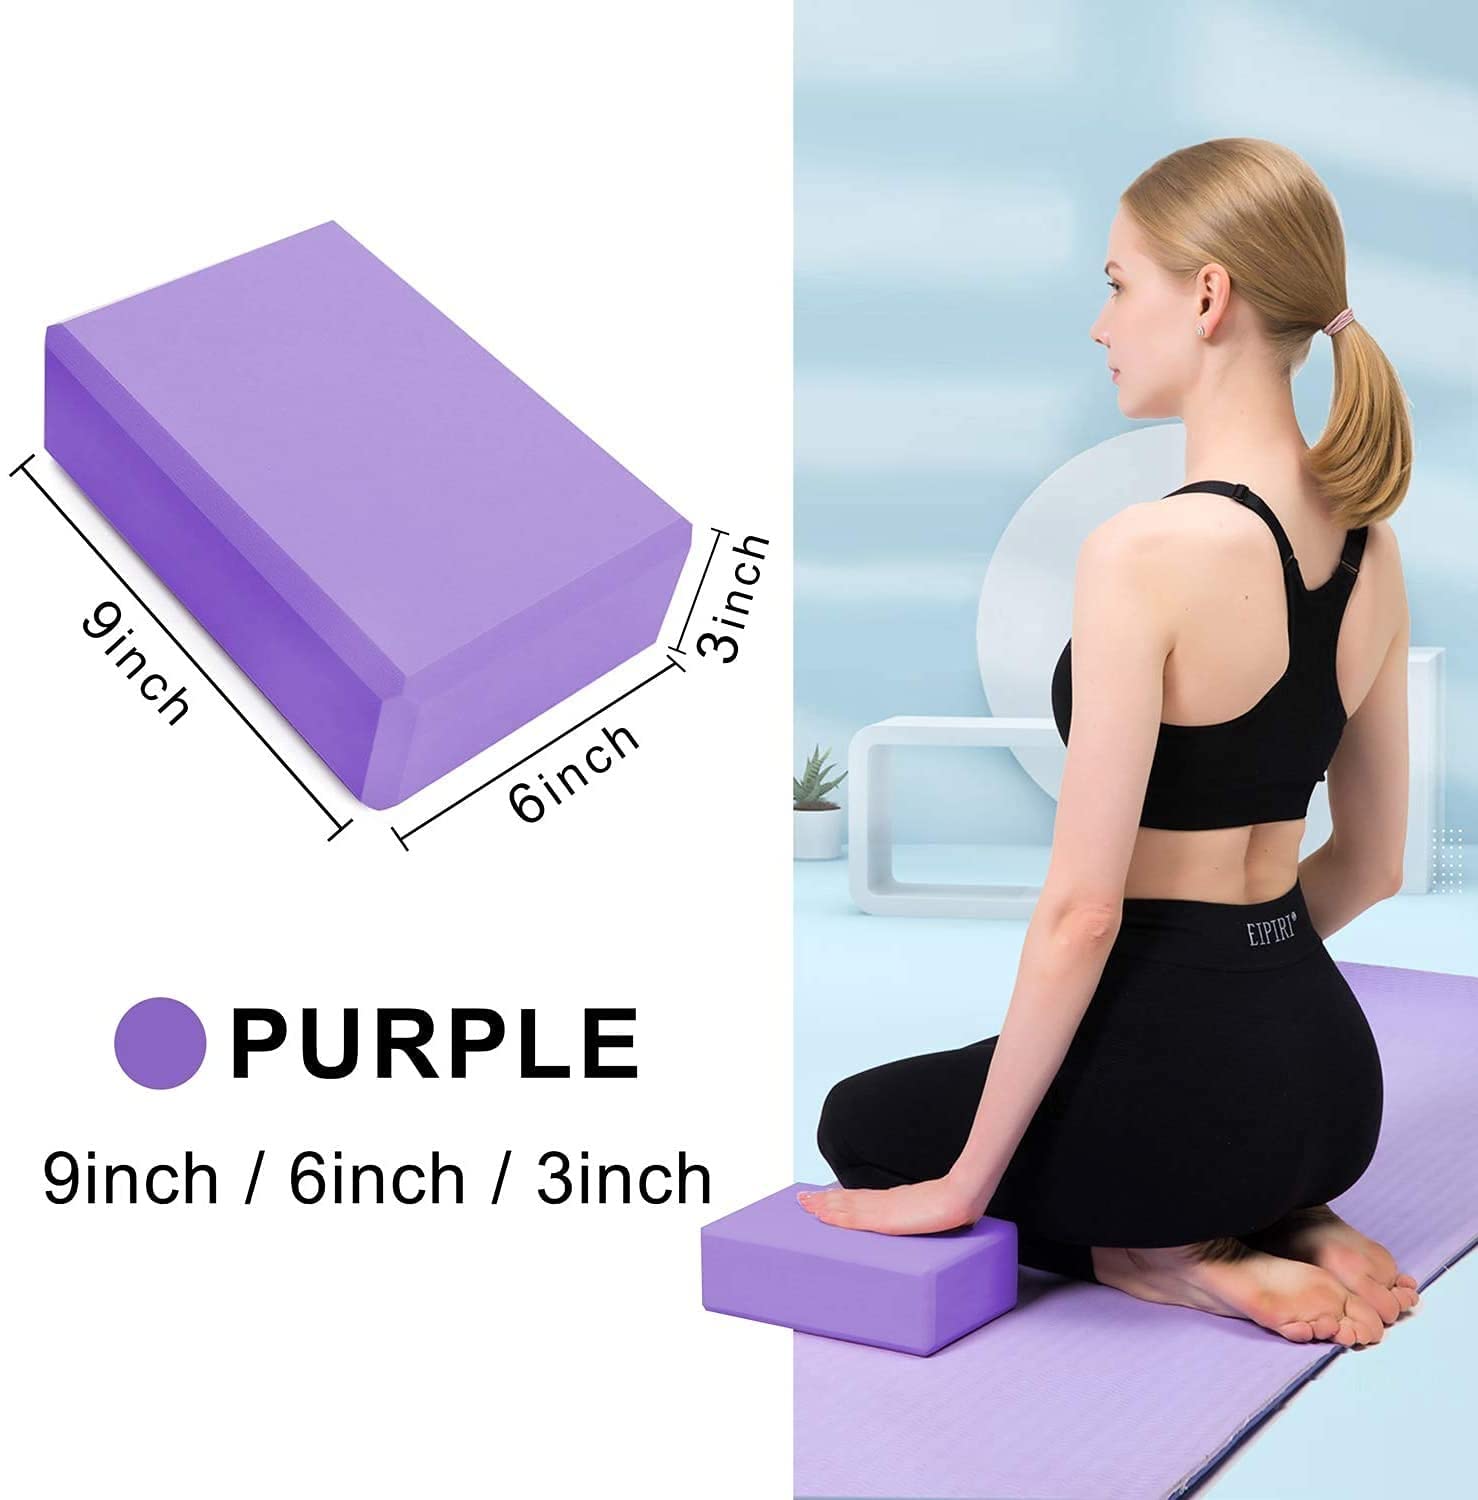 High Density Eva Foam Yoga Blocks Non Toxic Anti Skid Yoga Brick Block For  Improve Strength And Aid Balance And Flexibility For Women Yoga Accessories